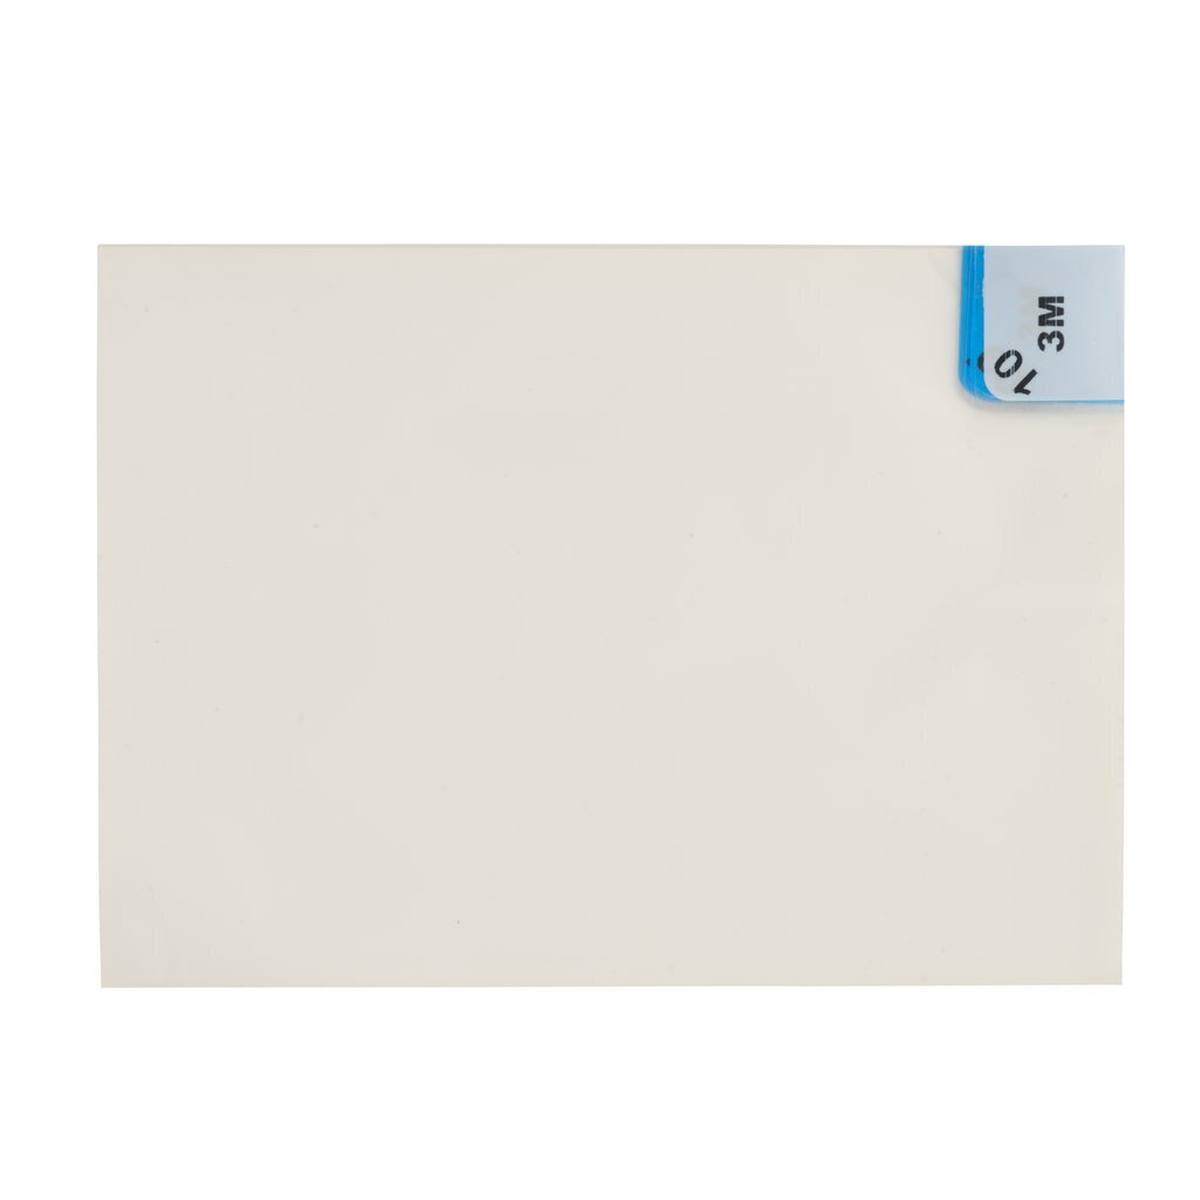 3M 4300 Nomad Fine Dust Adhesive Mat, white, 1.15m x 0.6m, 40pcs transparent polyethylene layers